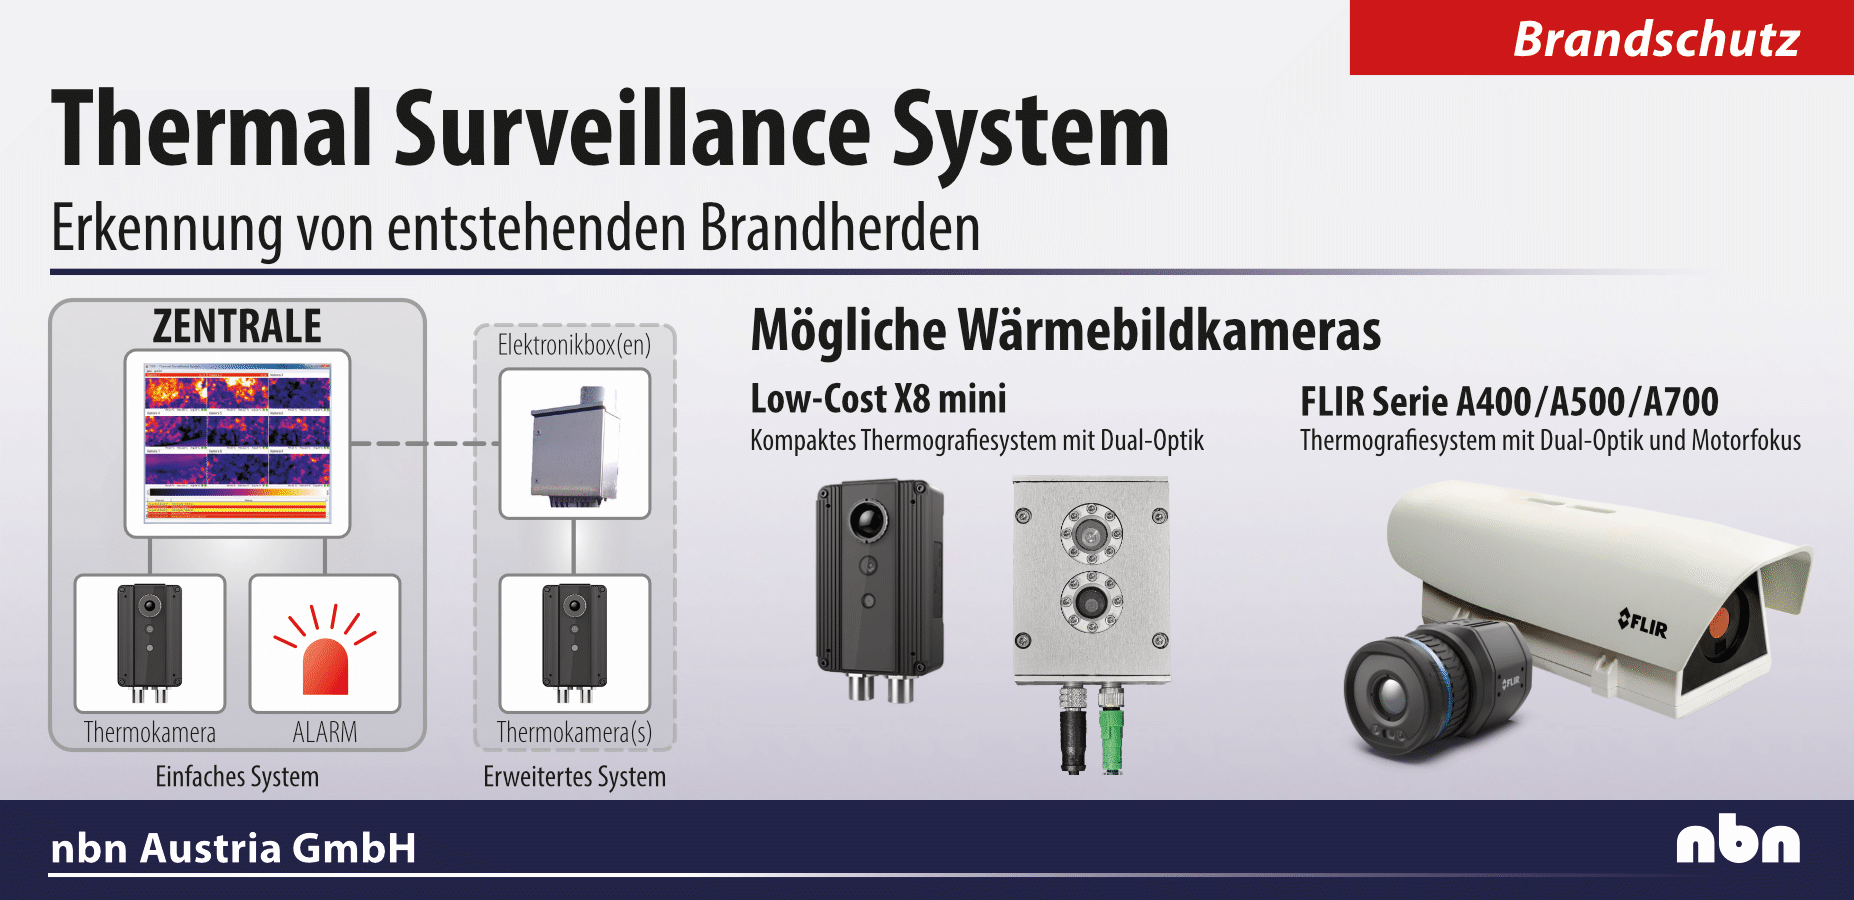 Thermal Surveillance System (TSS)